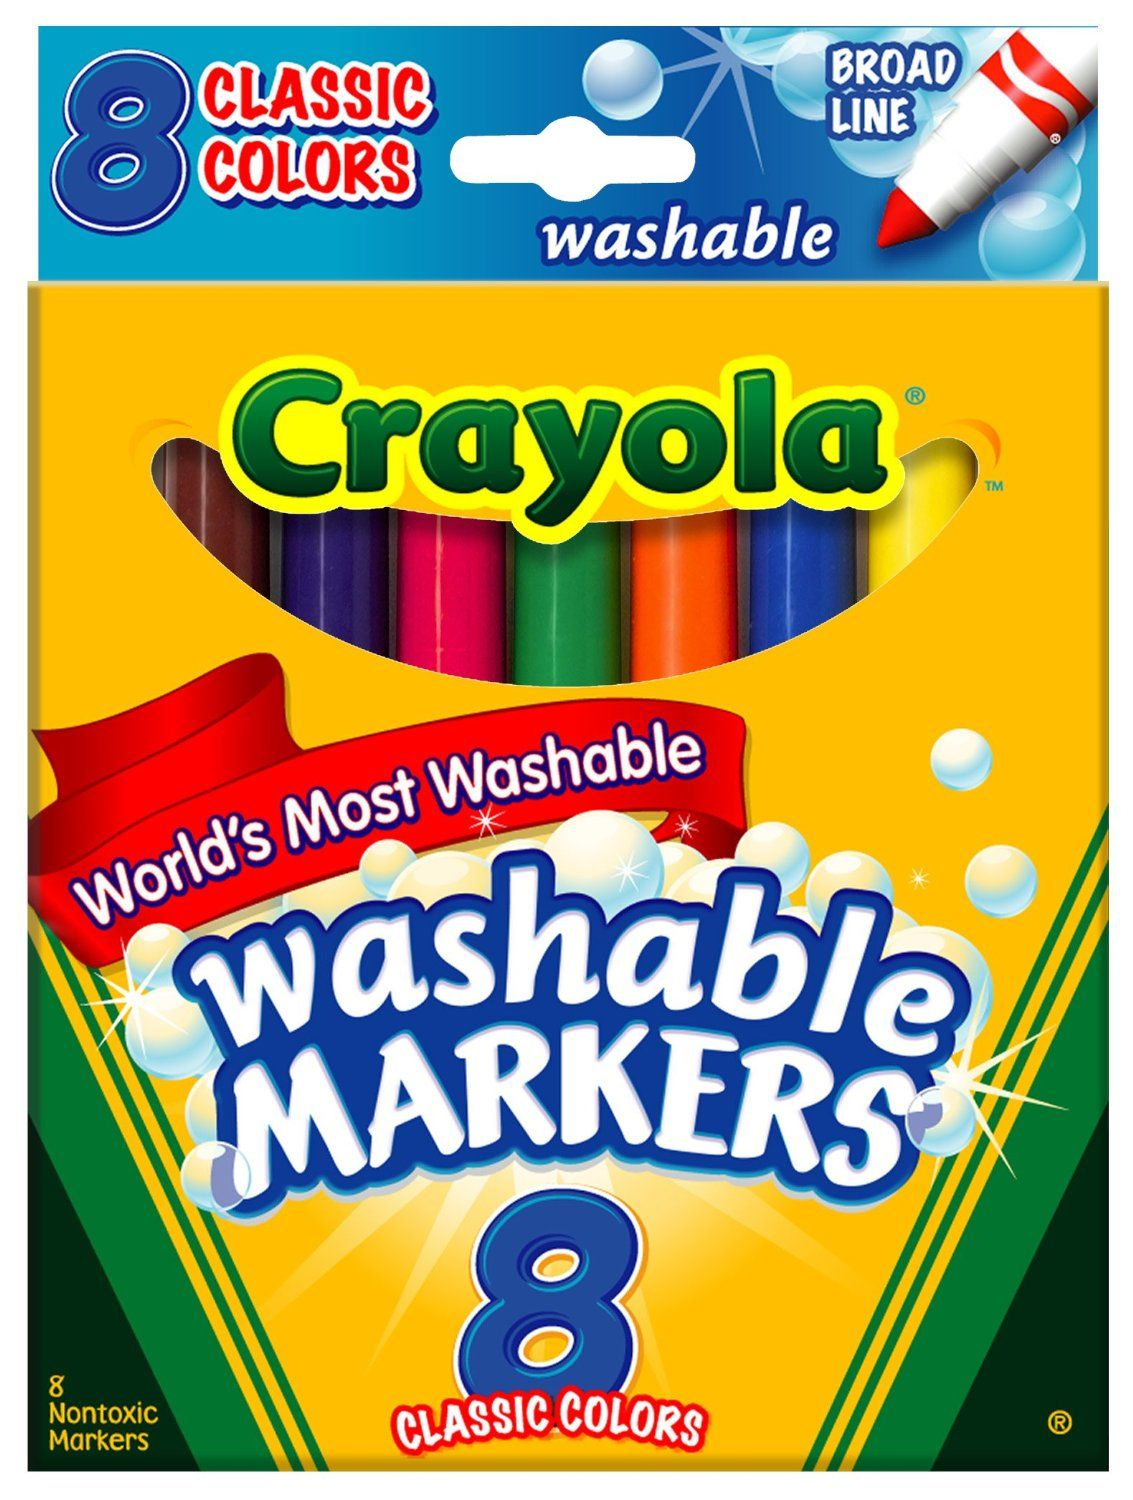 Staples: Free Crayola Washable Markers After Rebate | Freebies - Free Printable Crayola Coupons